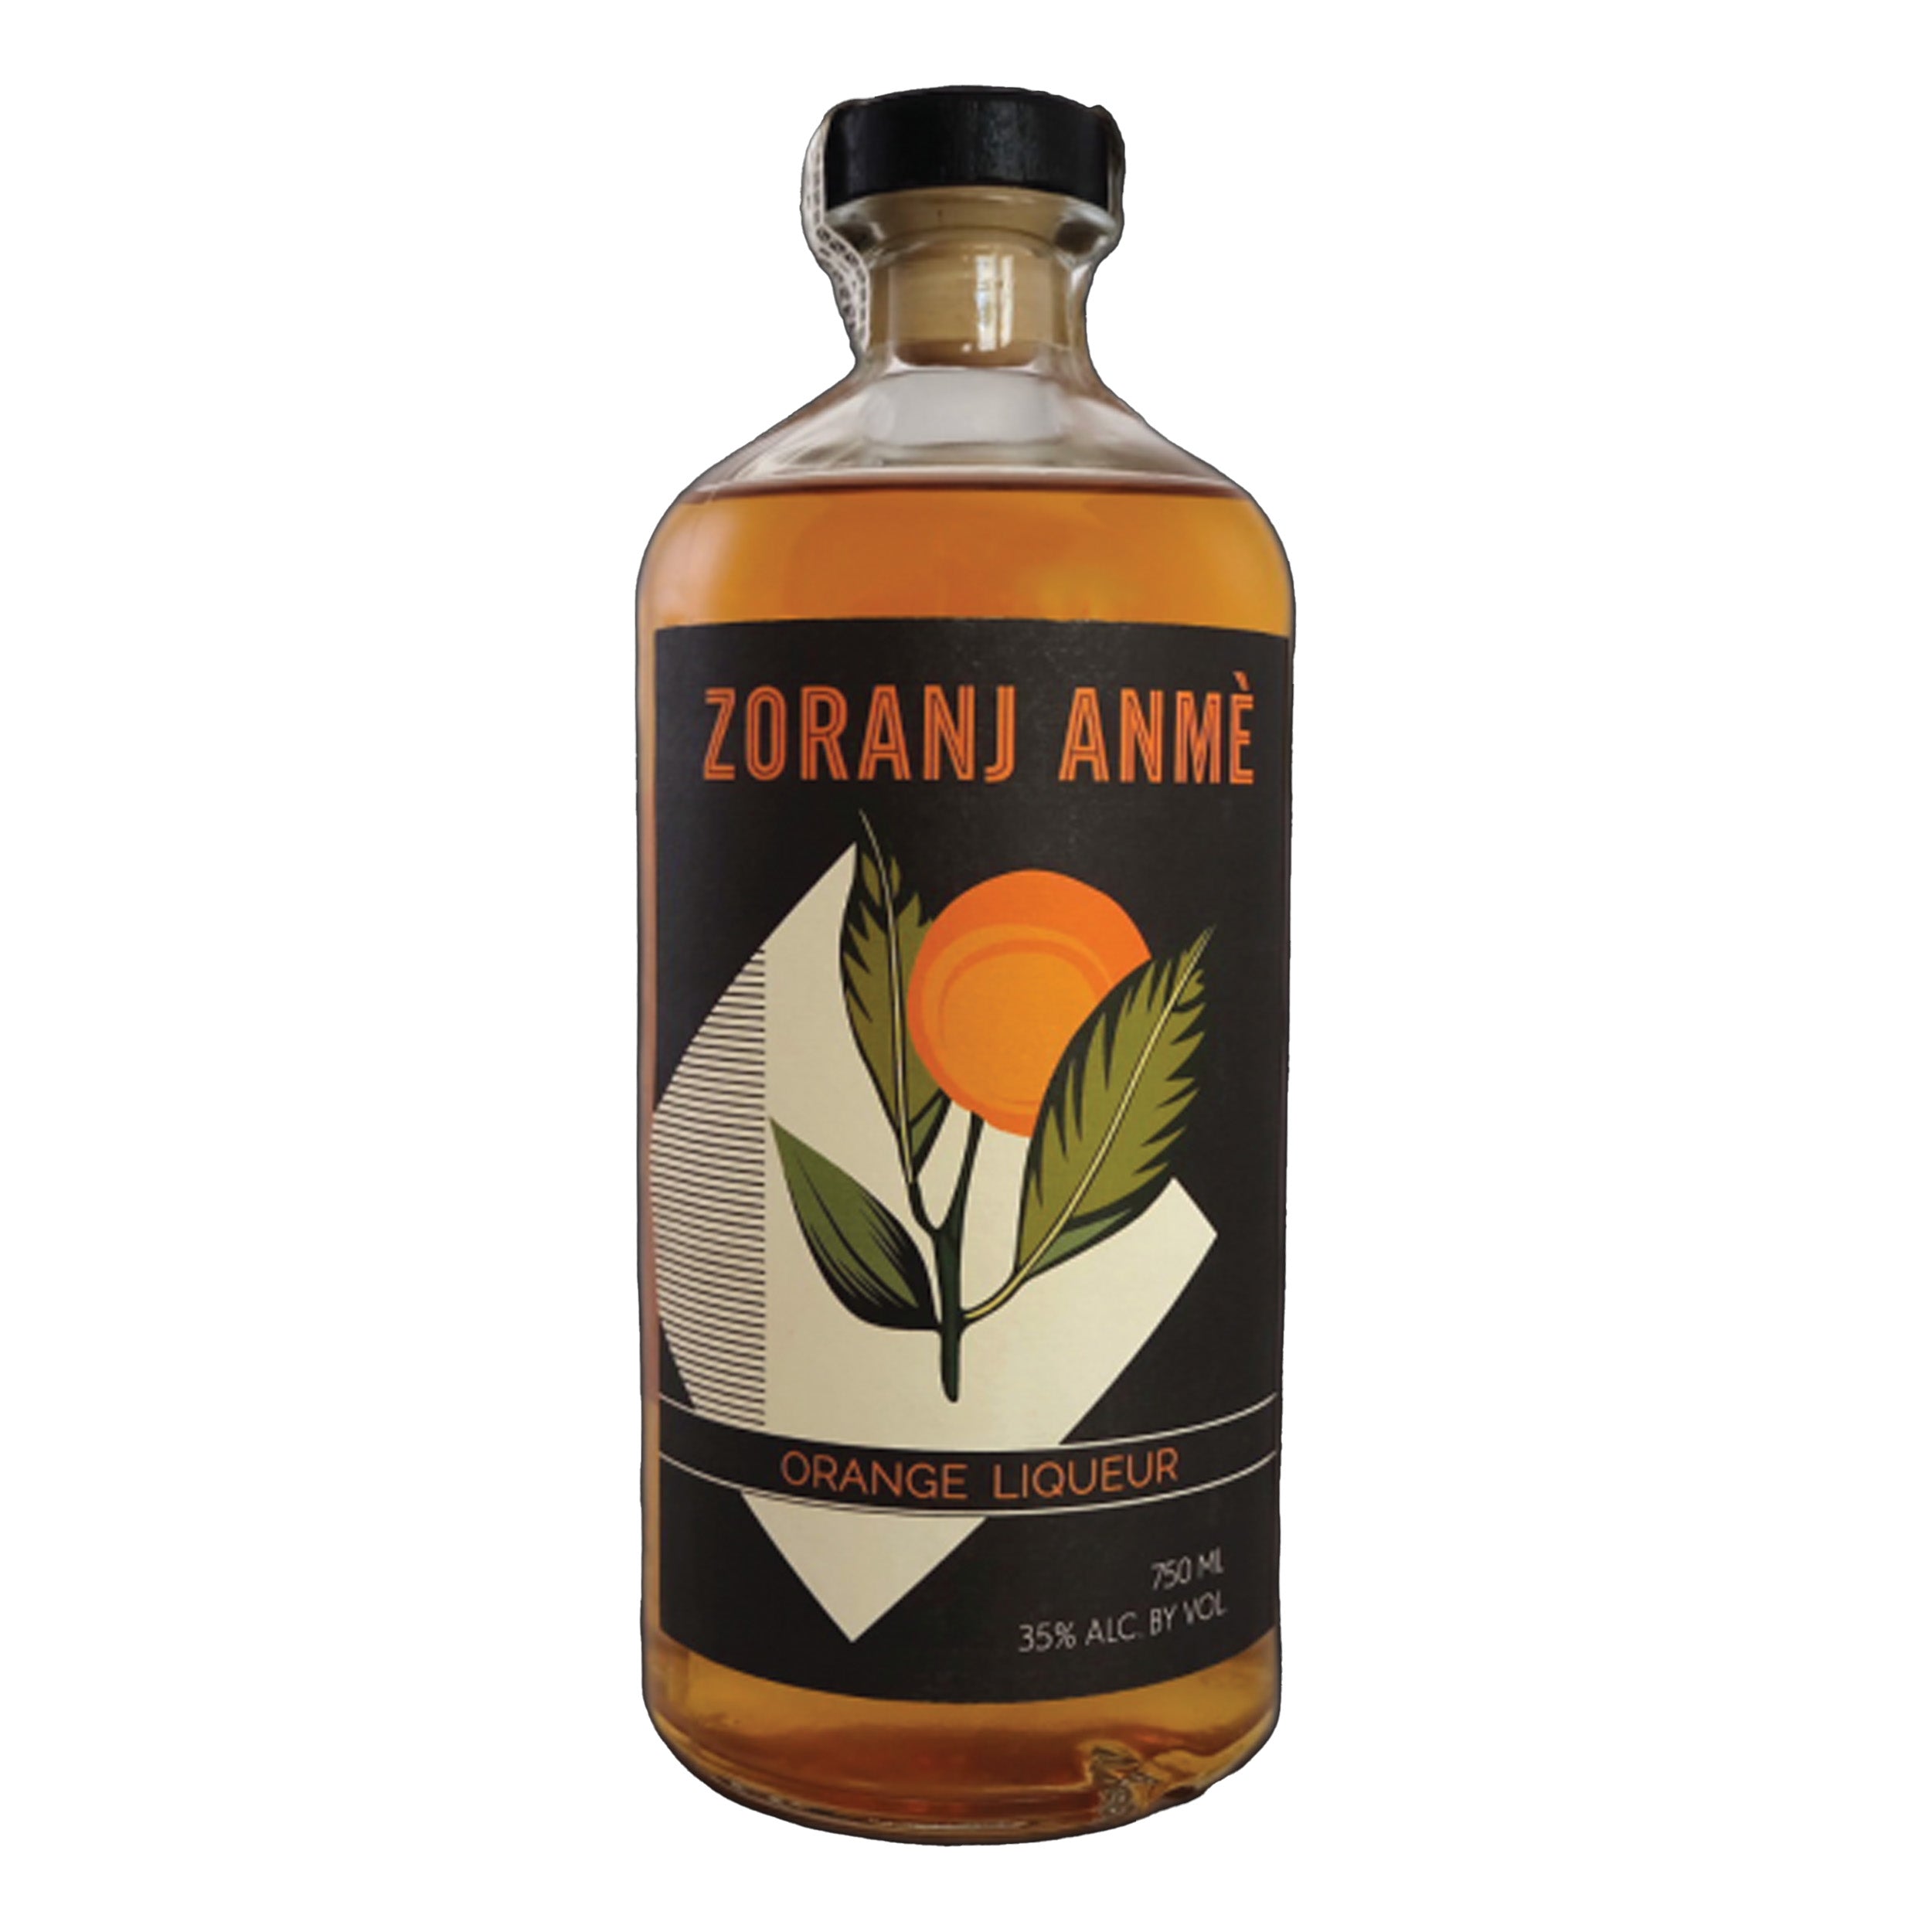 Ayiti Bitter Company Zoranj Anme Orange Liqueur